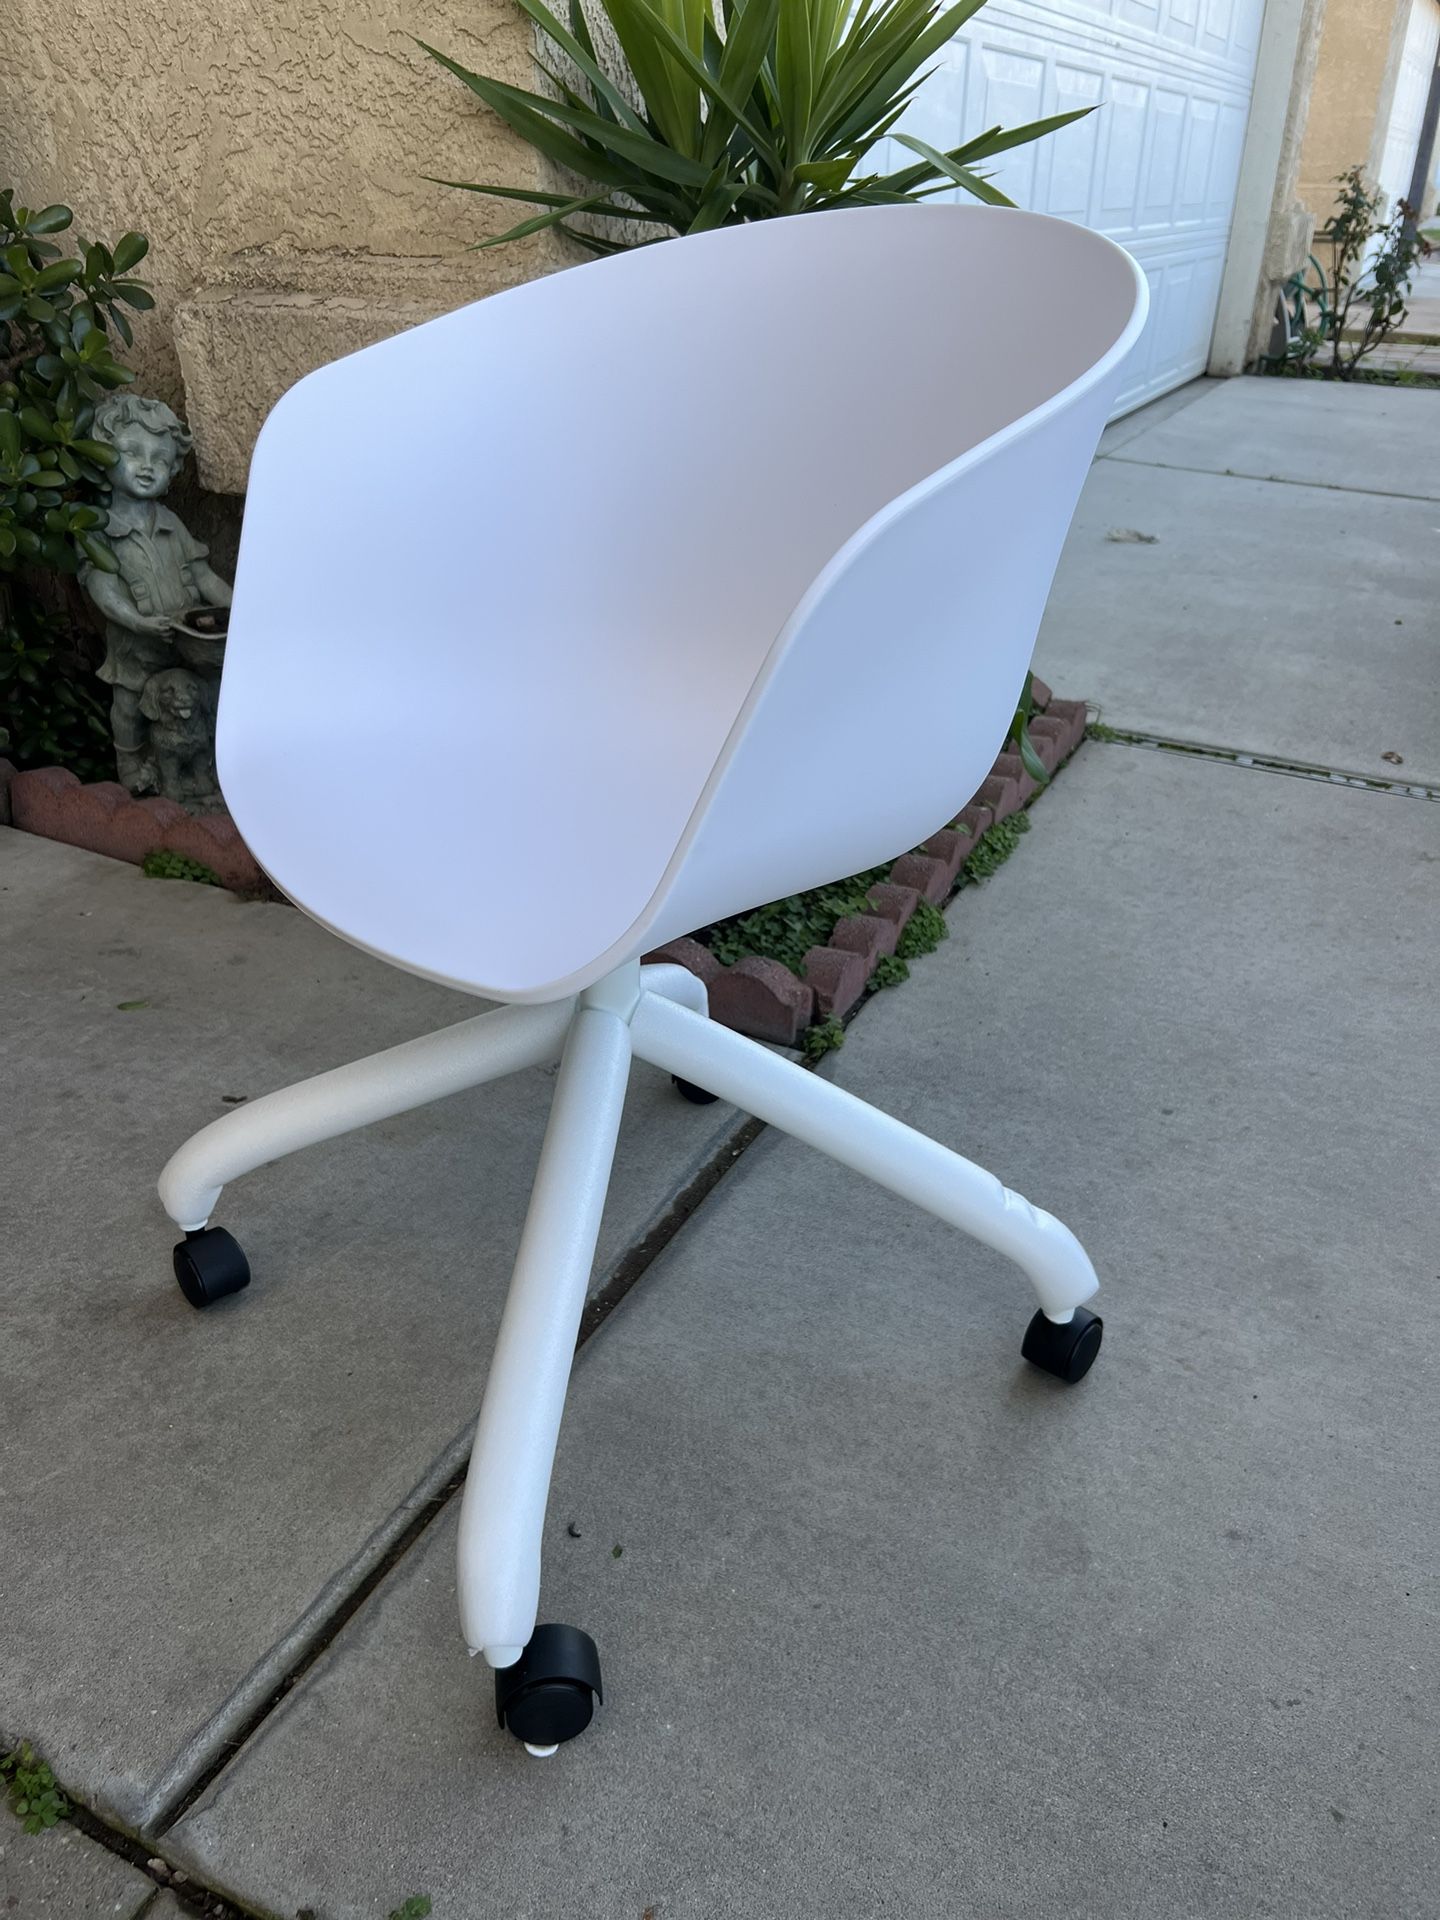 Brand New. Mid Century Modern Swivel Desk Chair. White Color. Retails Over $330